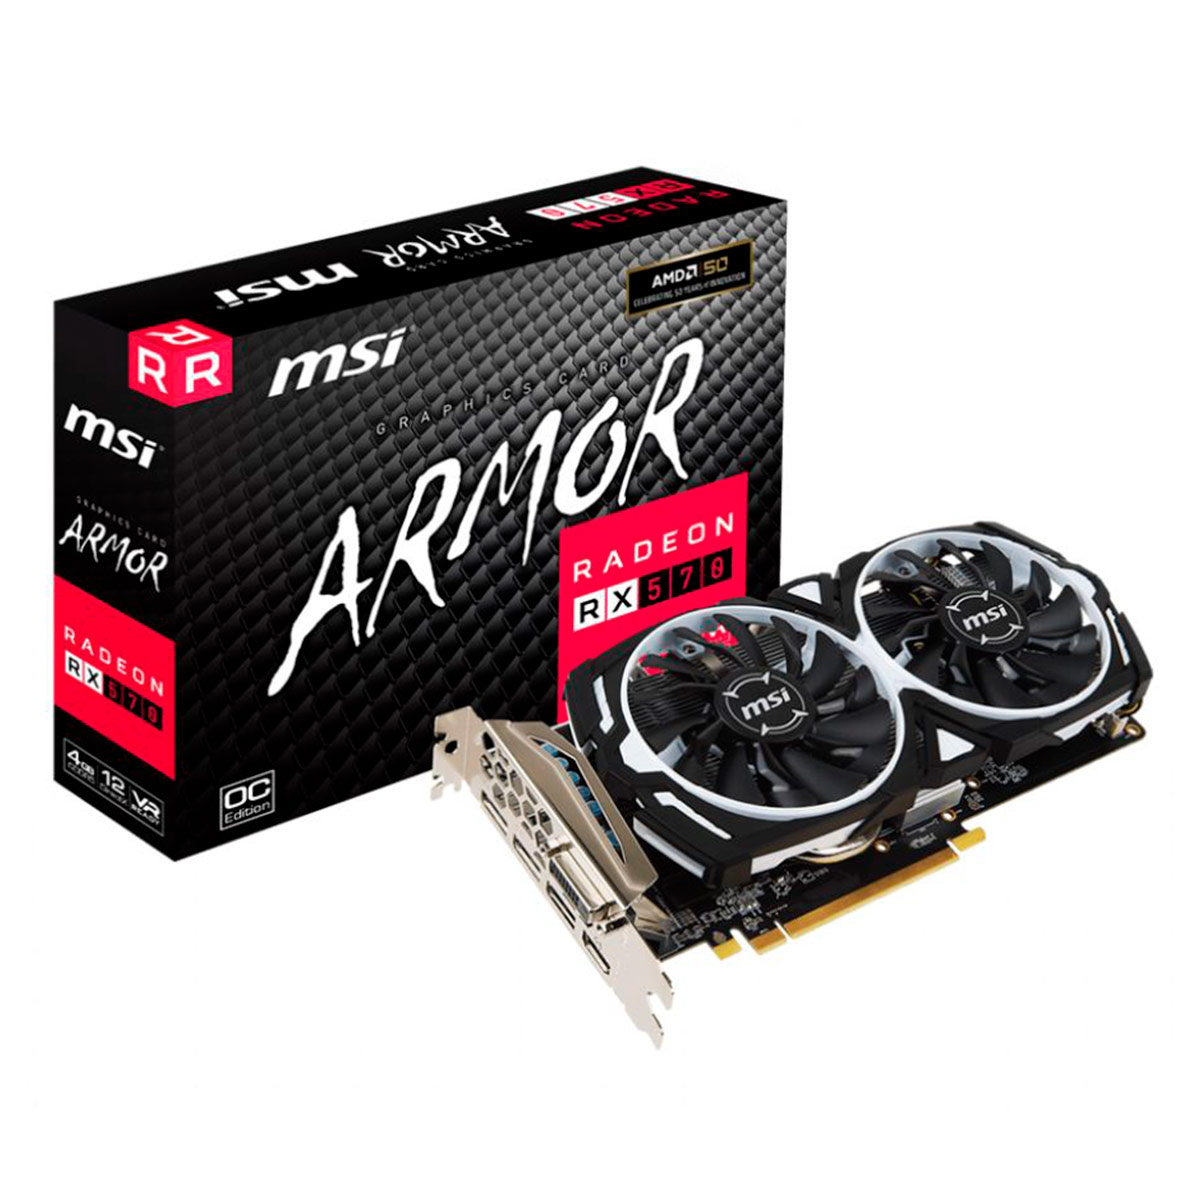 AMD Radeon RX 570 4GB GDDR5 256bits - Armor OC Edition - 912-V341-297